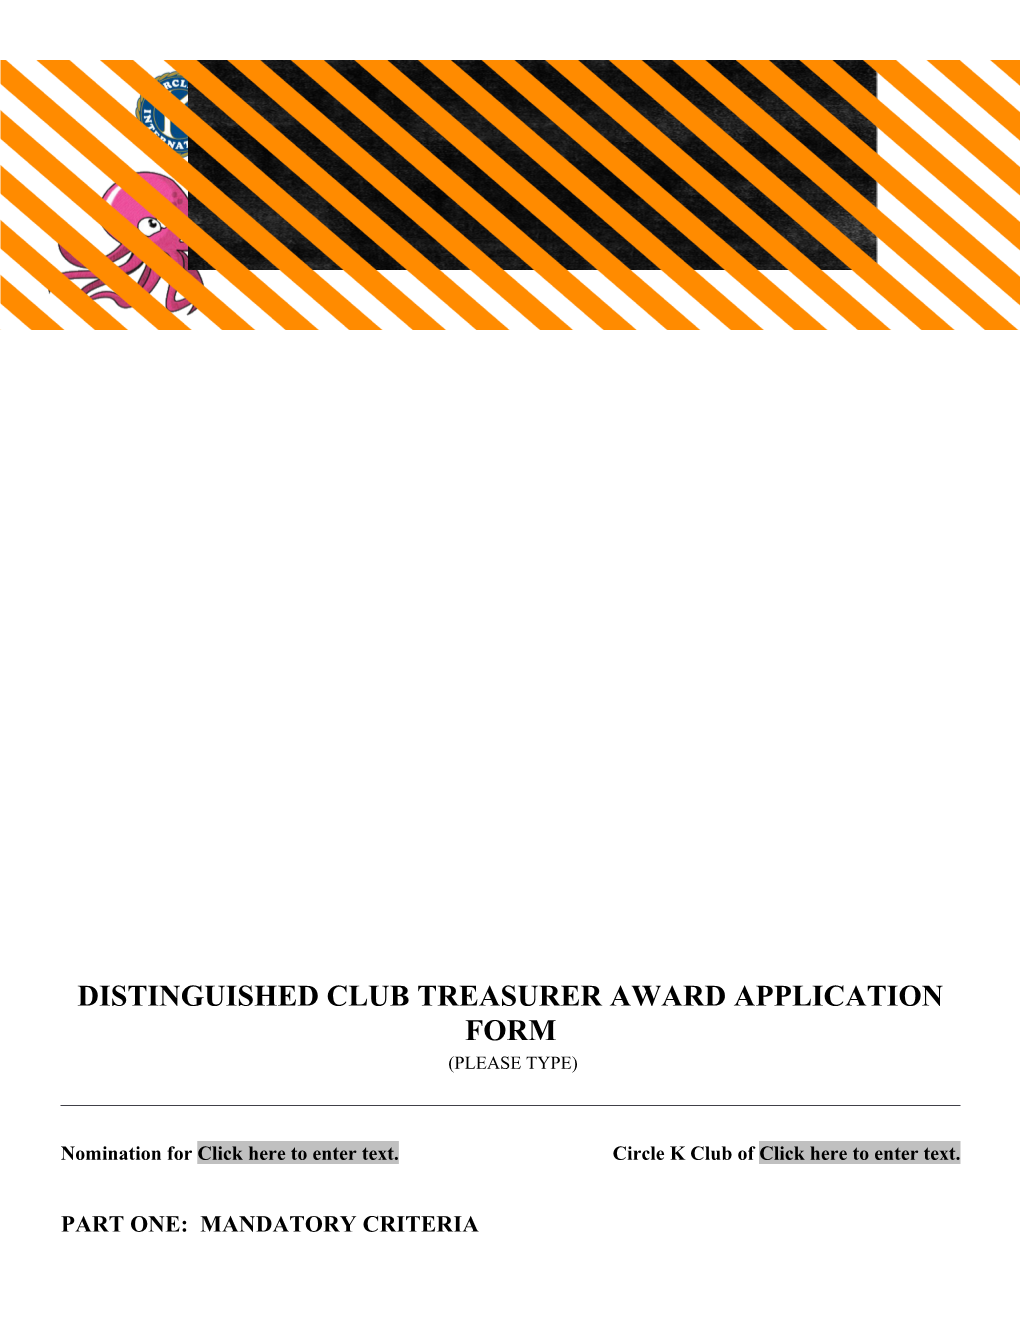 Distinguished Club Treasurer Award Application Form